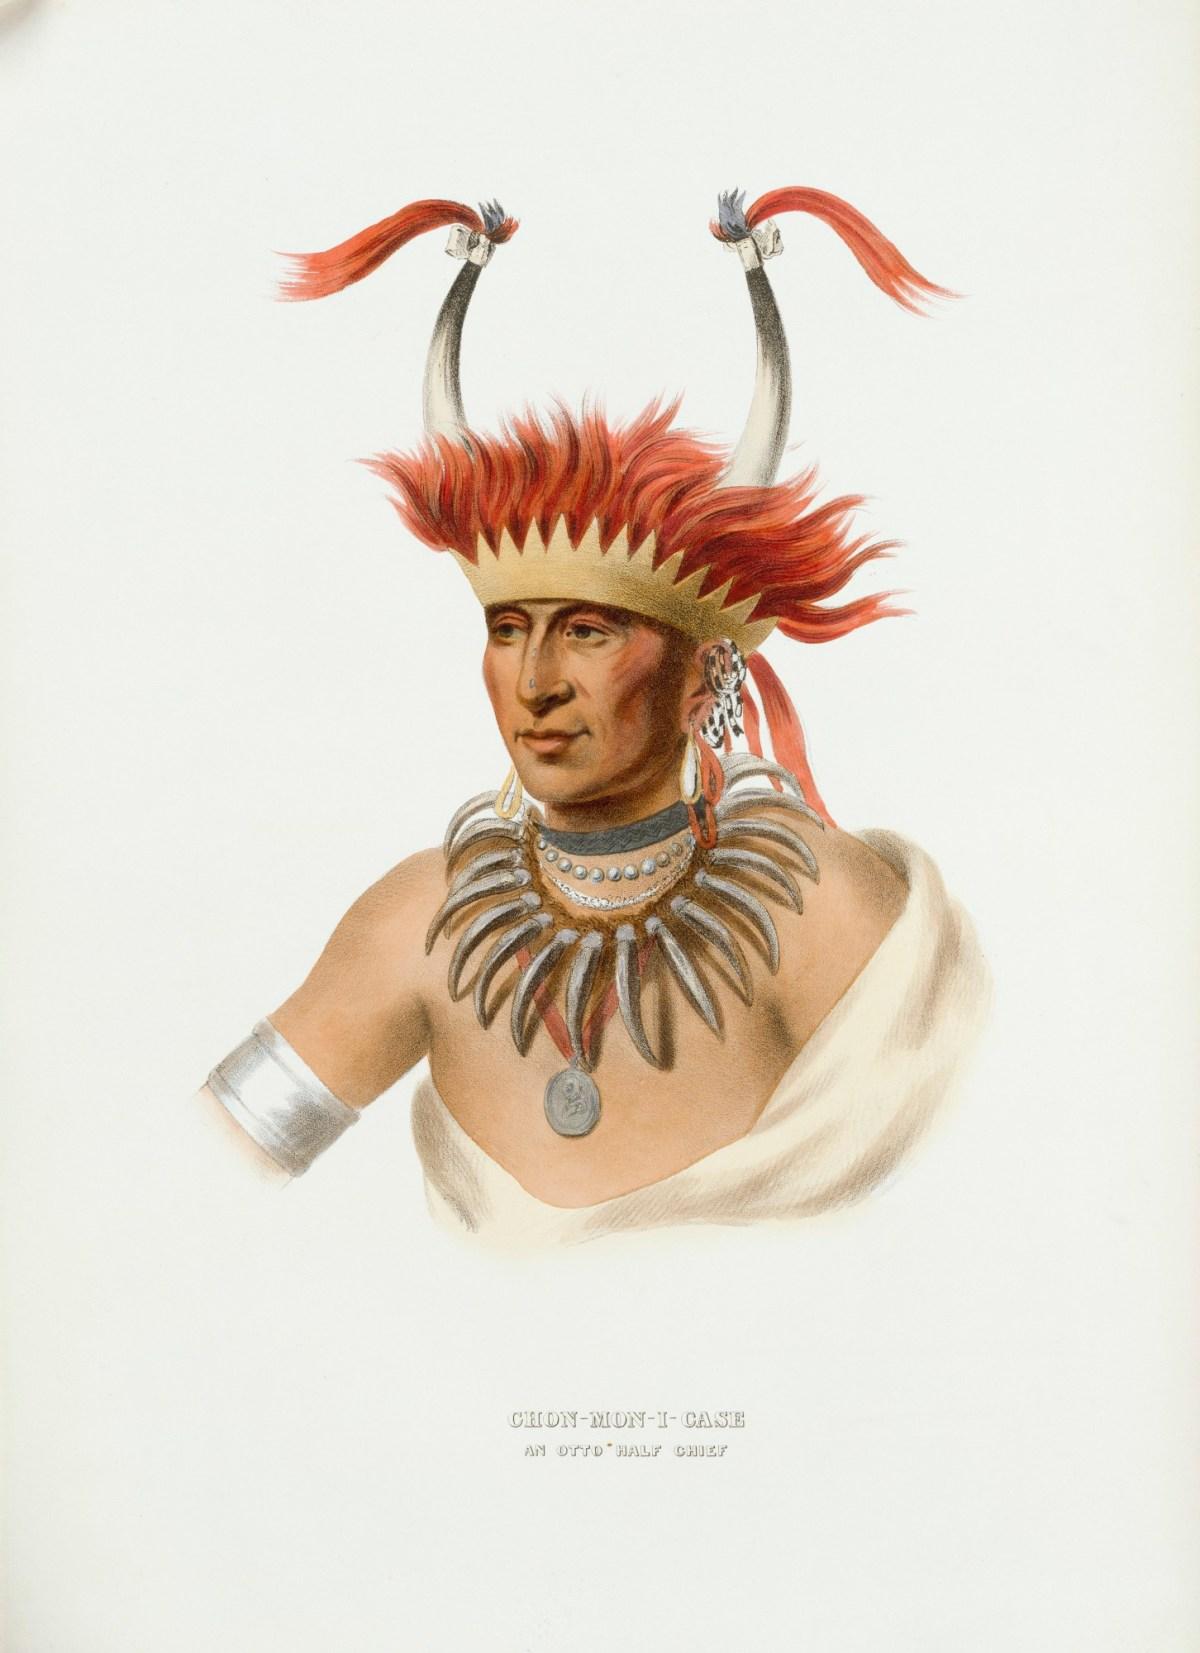 Chon-Mon-I-Case, an Otto half chief. - American Realist Print by Unknown